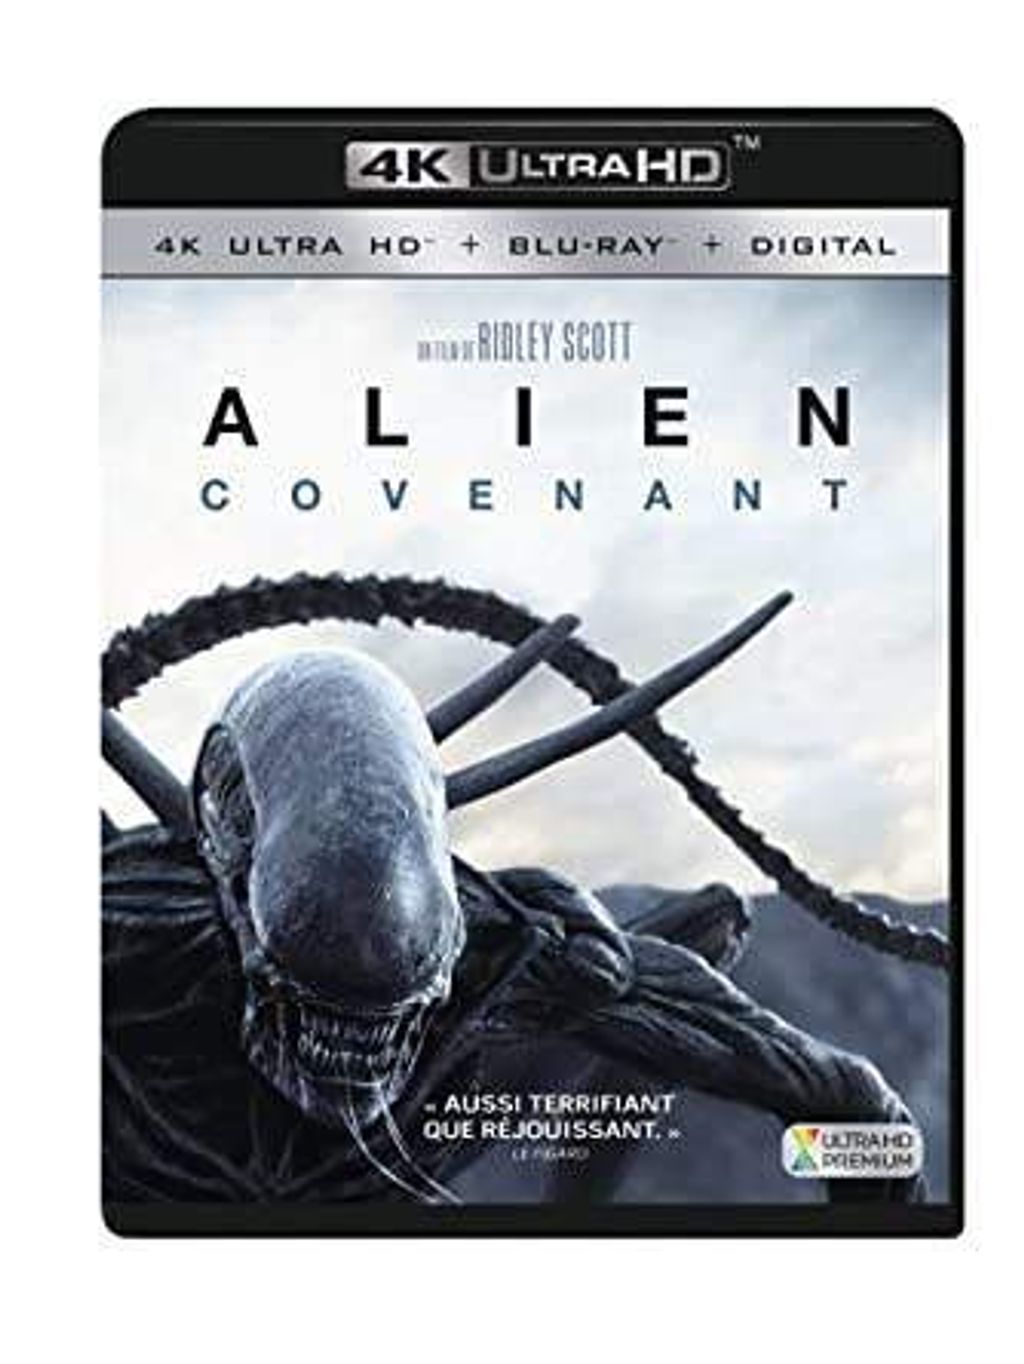 ALIEN Covenant [4K UHD] [Blu-ray] [2017] [Region Free] 2-DISCS.jpg